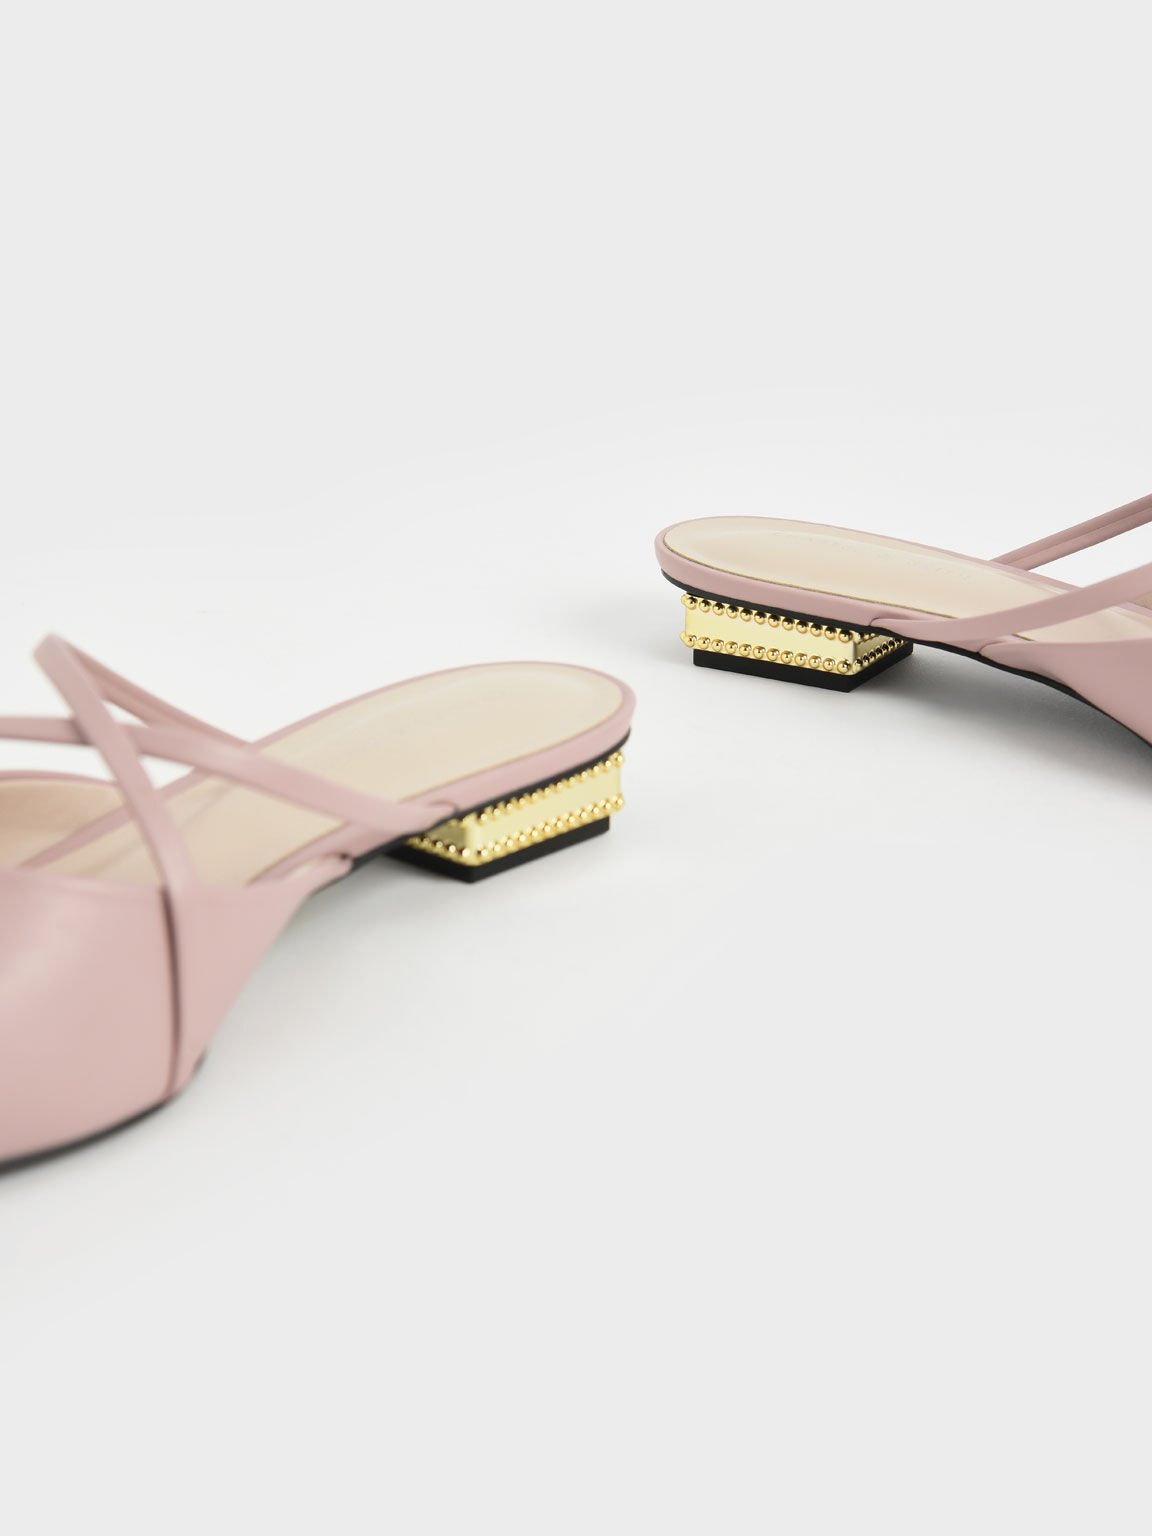 Sepatu Mules Pointed Toe Cross Strap, Light Pink, hi-res